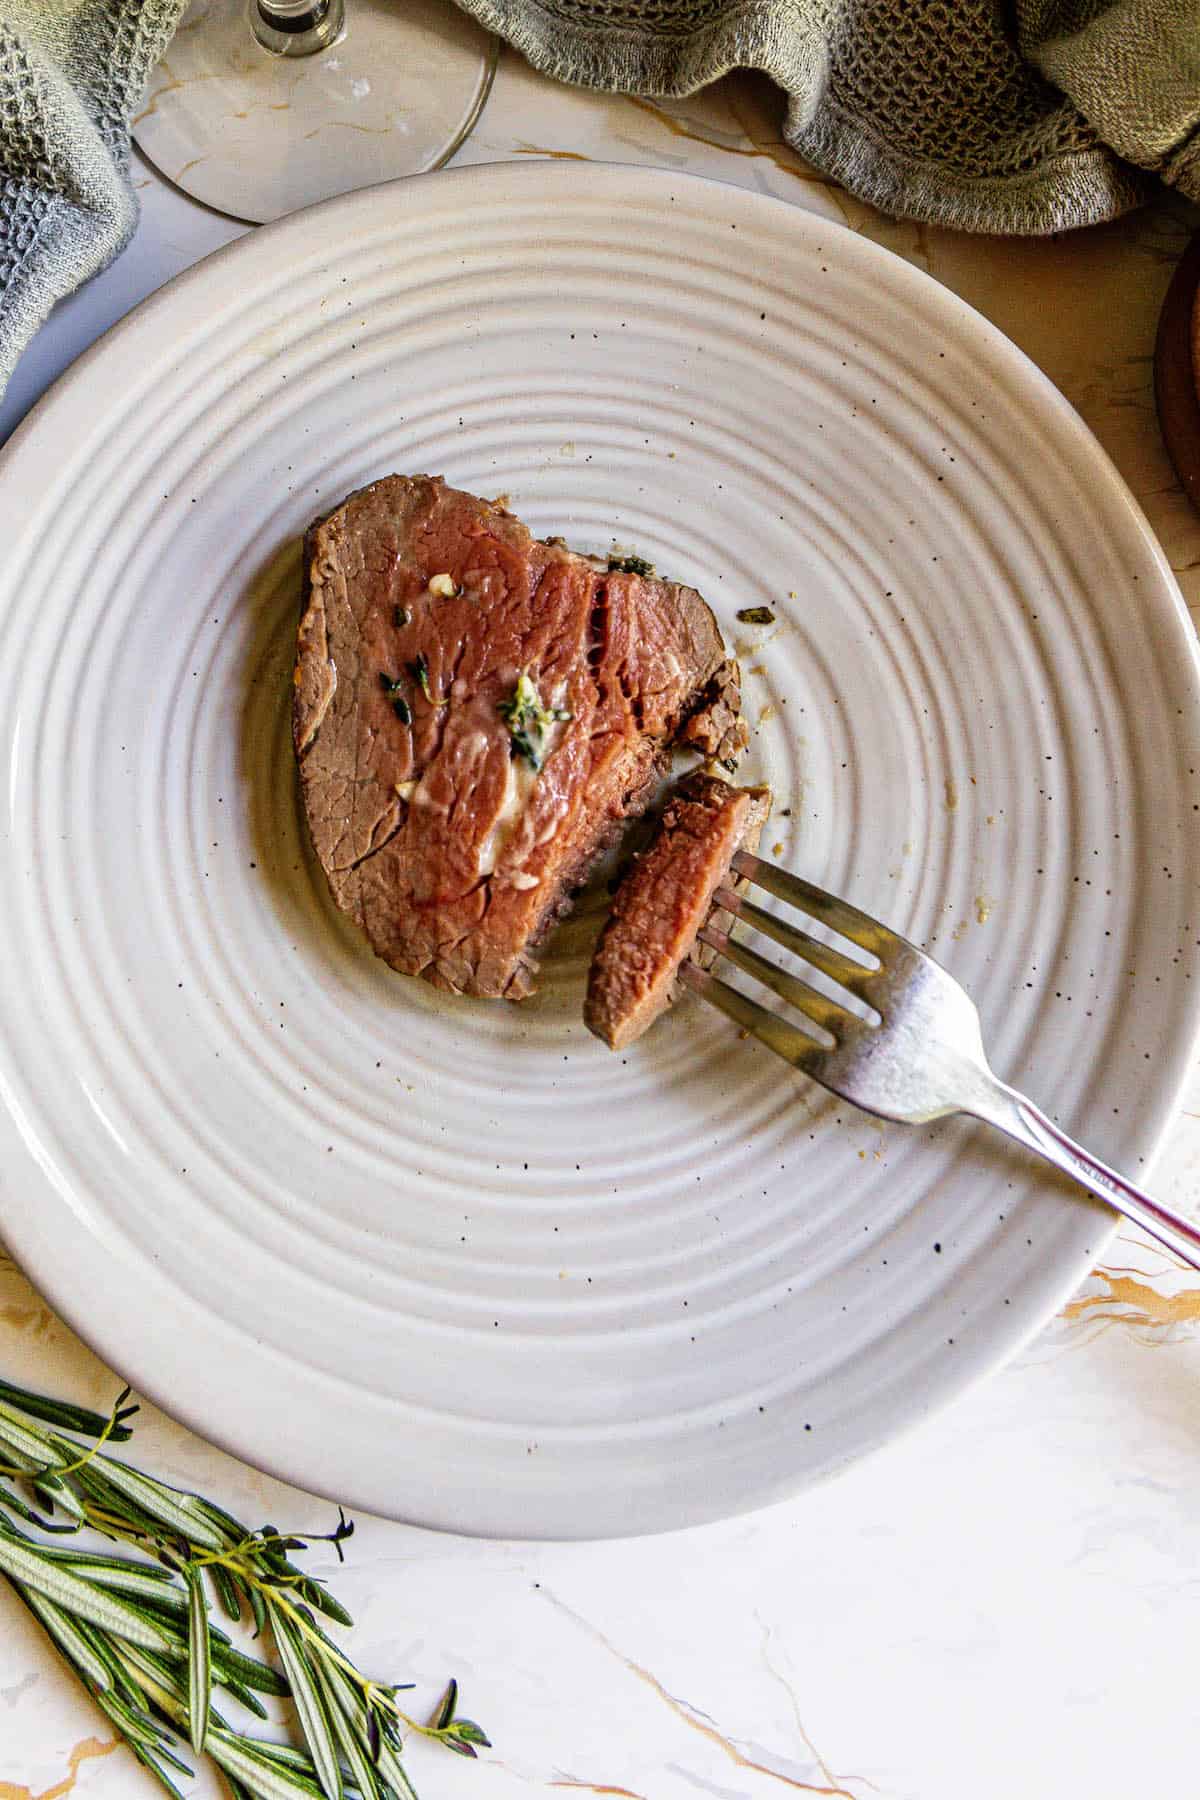 A garlic herb beef tenderloin on a plate with a fork.